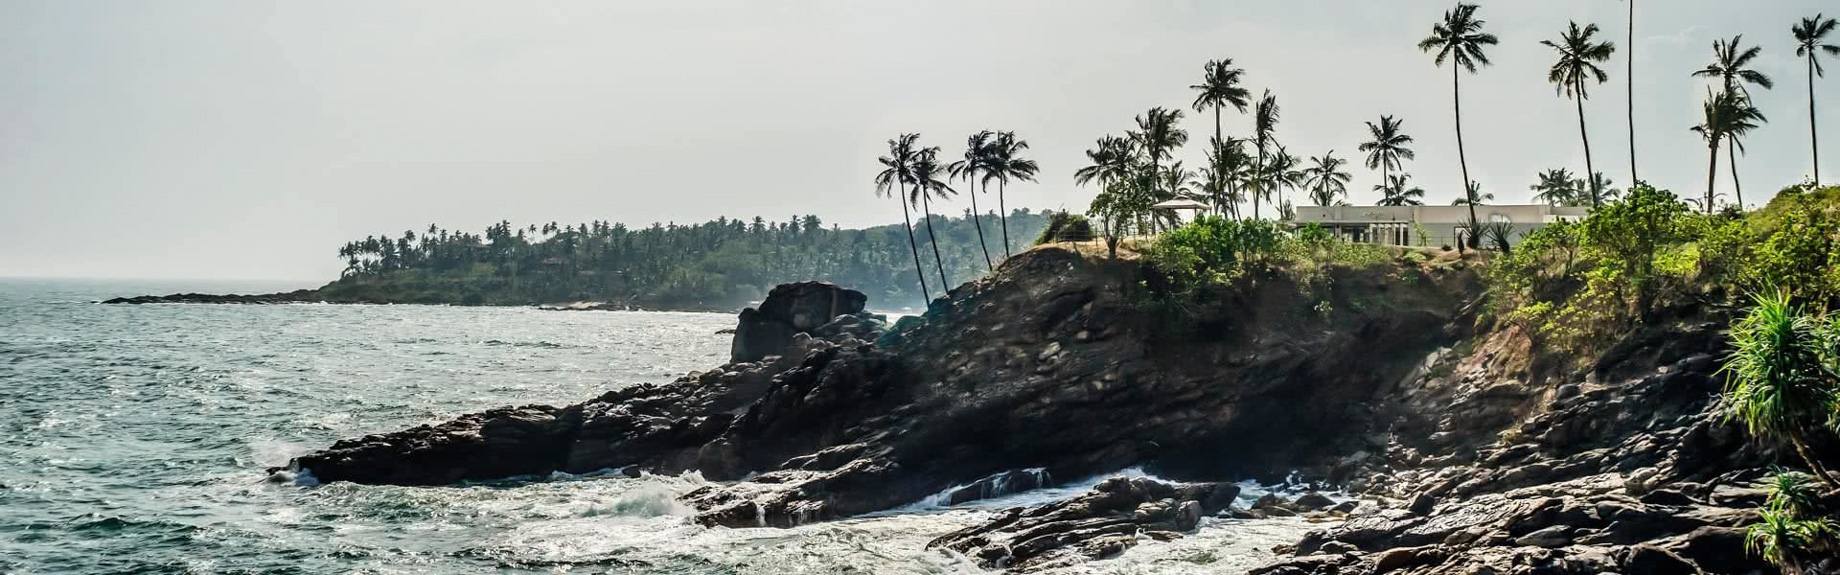 Anantara Peace Haven Tangalle Resort – Sri Lanka – Beach Rocks